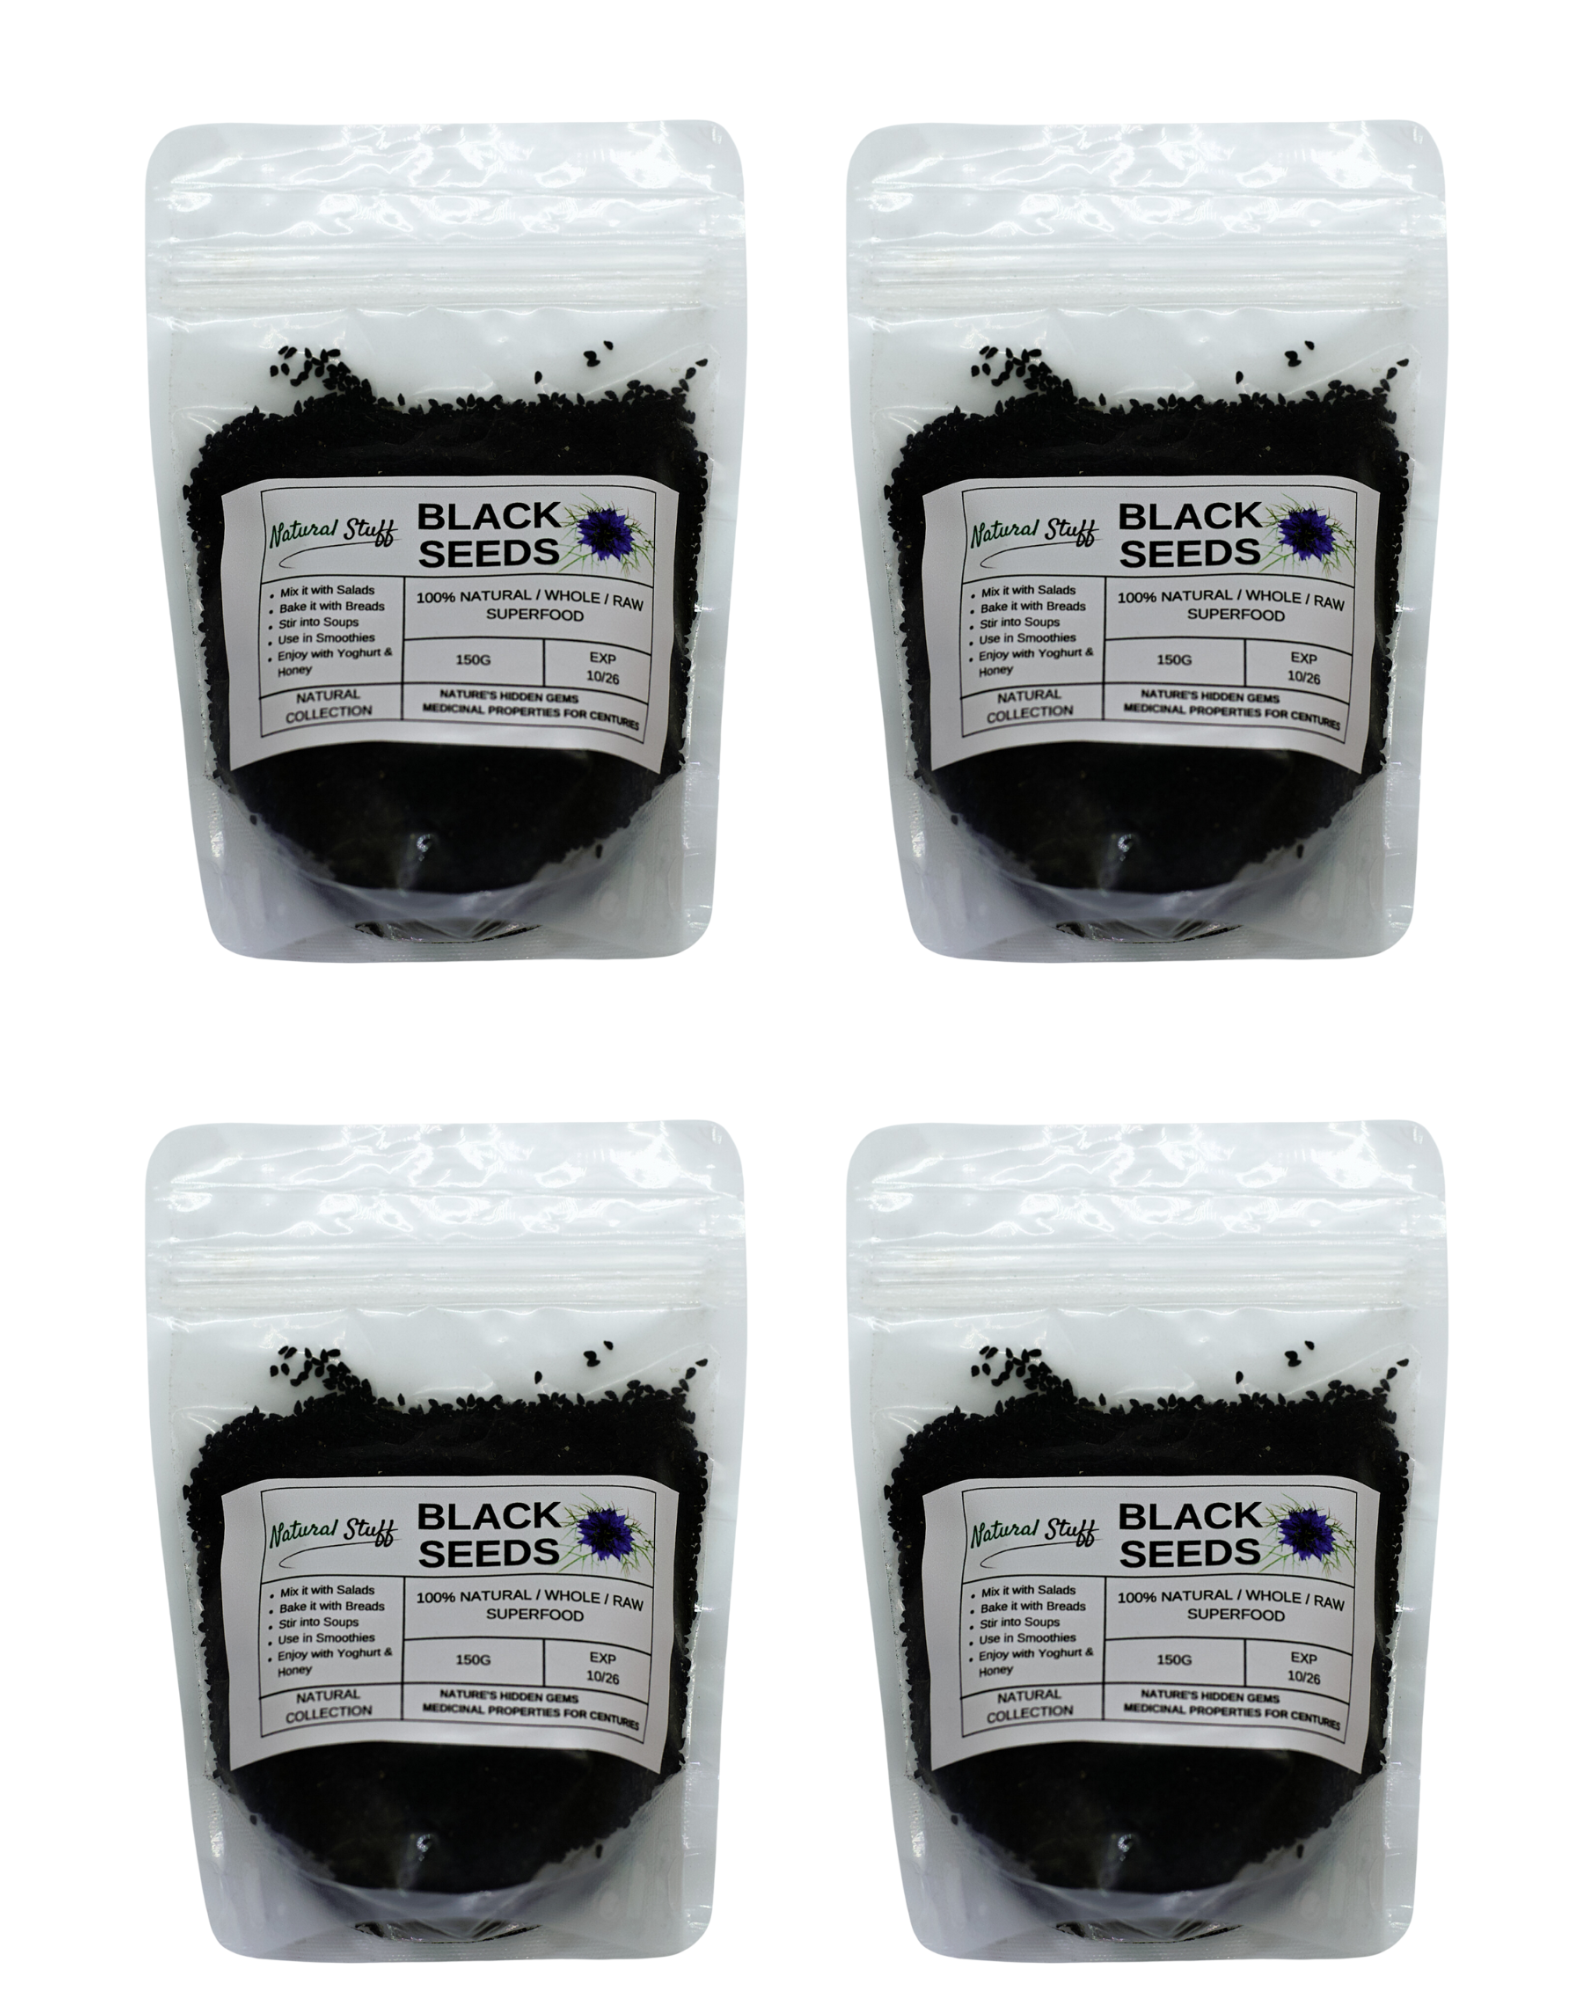 Natural Stuff Premium Quality Black Cumin Seeds 100% Natural 150g